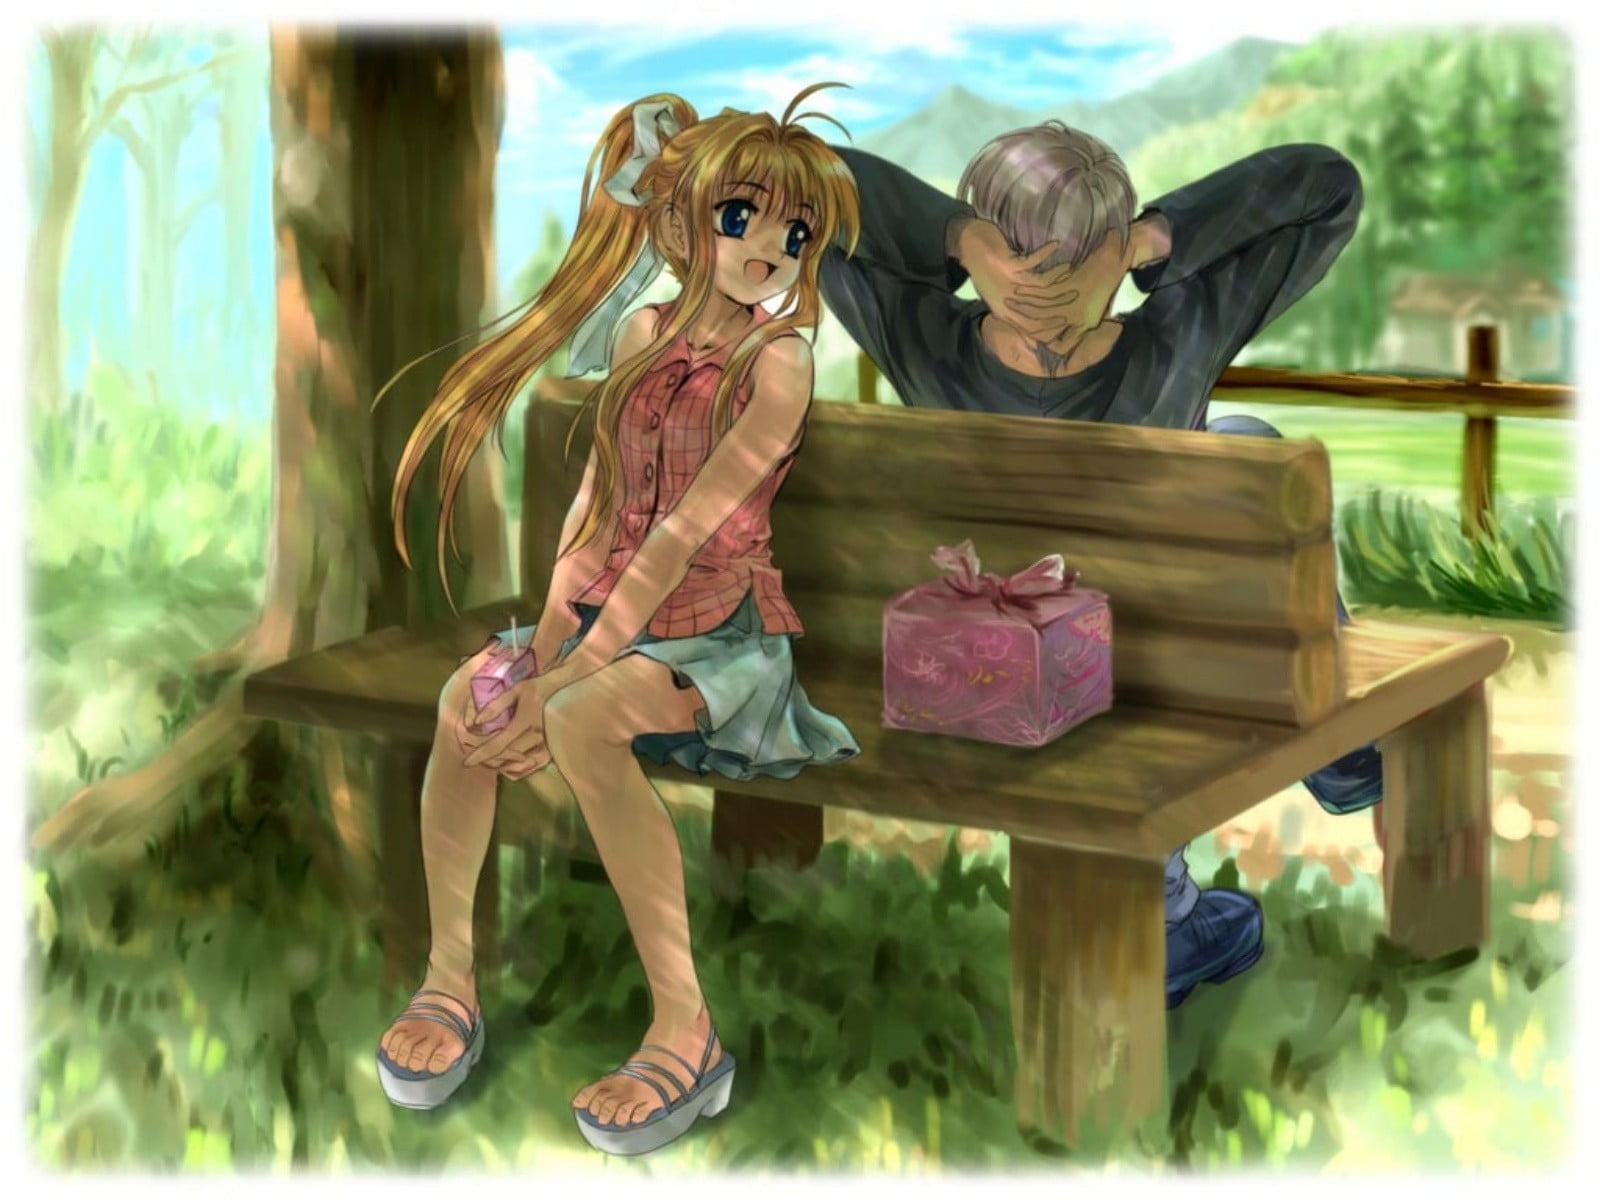 Anime Couple Sitting On Bench gambar ke 13